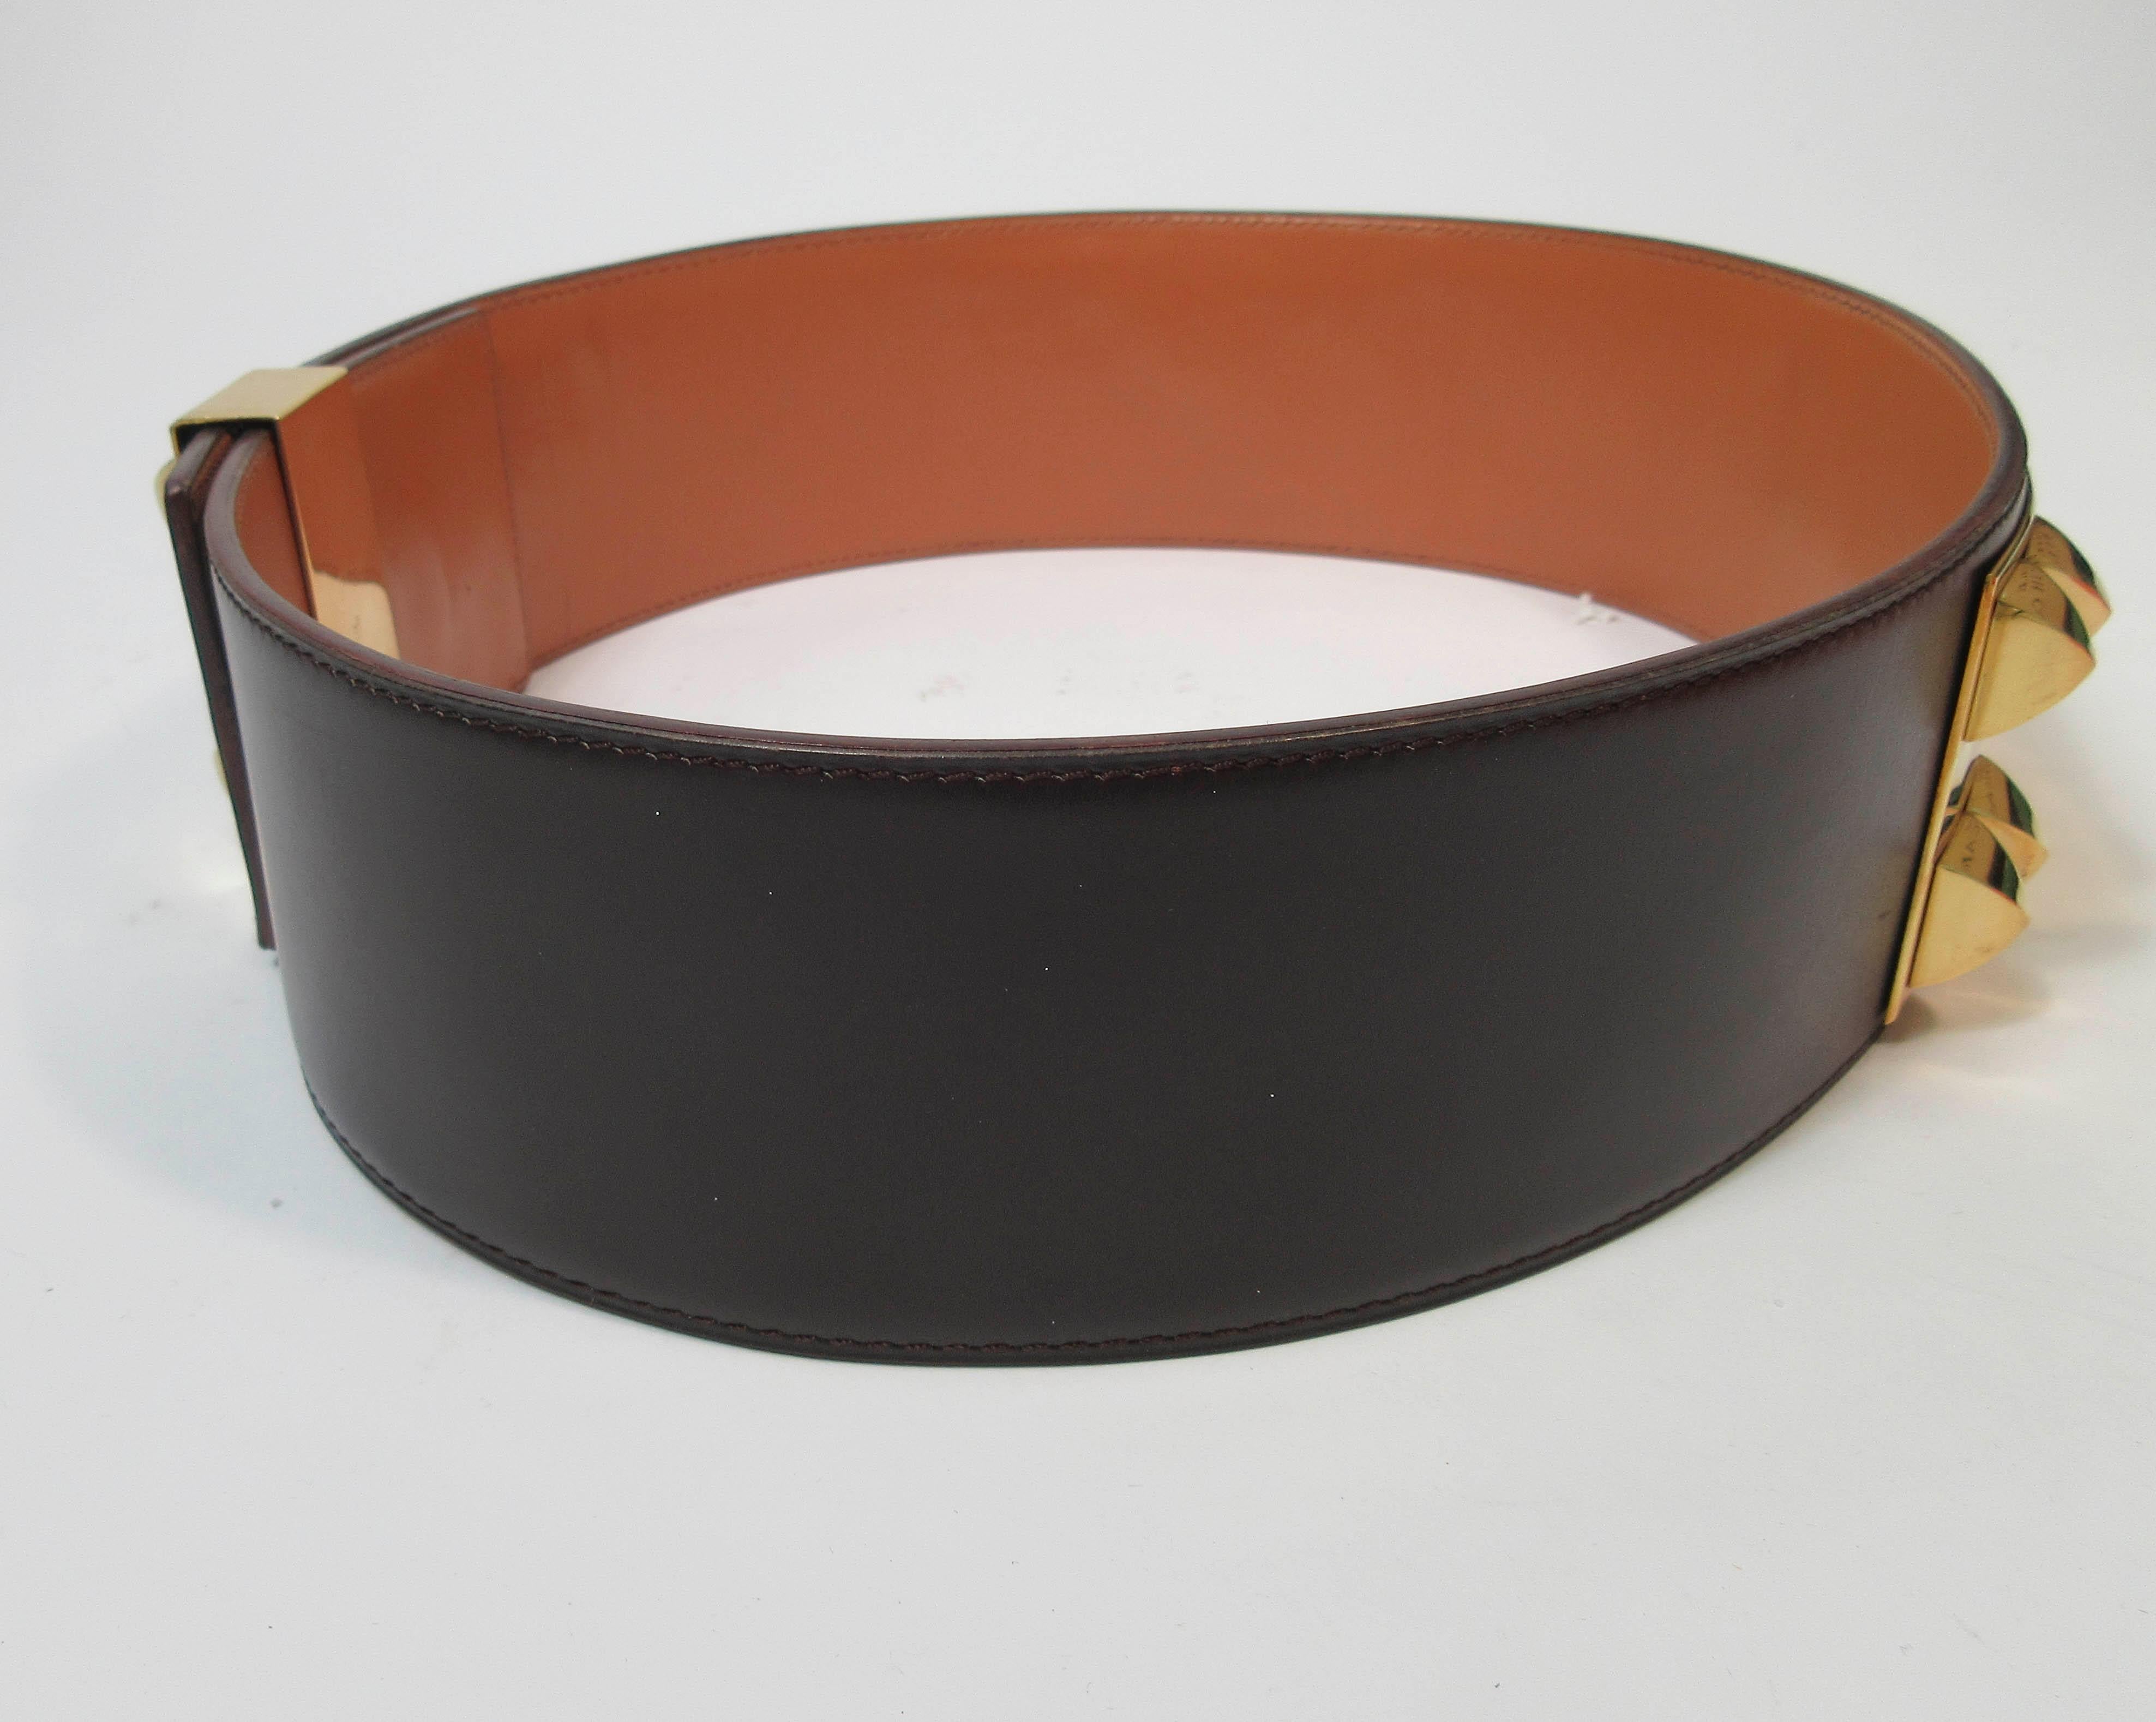 HERMES Collier De Chien Vintage Brown Leather Belt with Gold Hardware Size Large 9